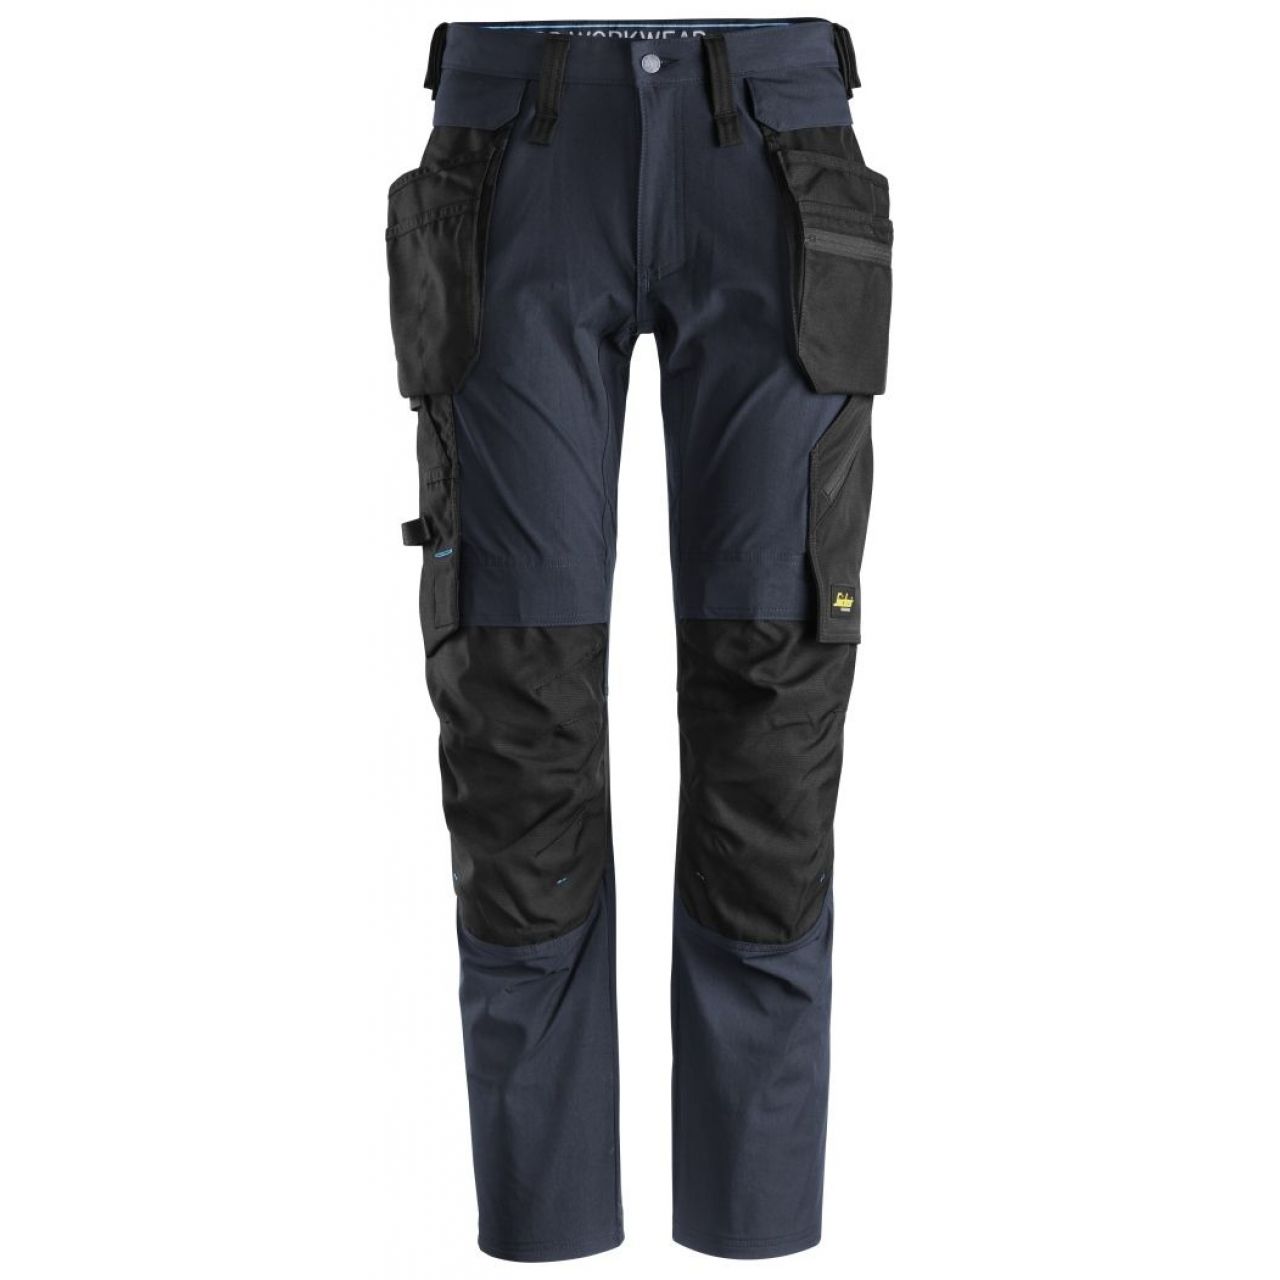 Pantalon + bolsillos flotantes desmontables LiteWork azul marino-negro talla 252